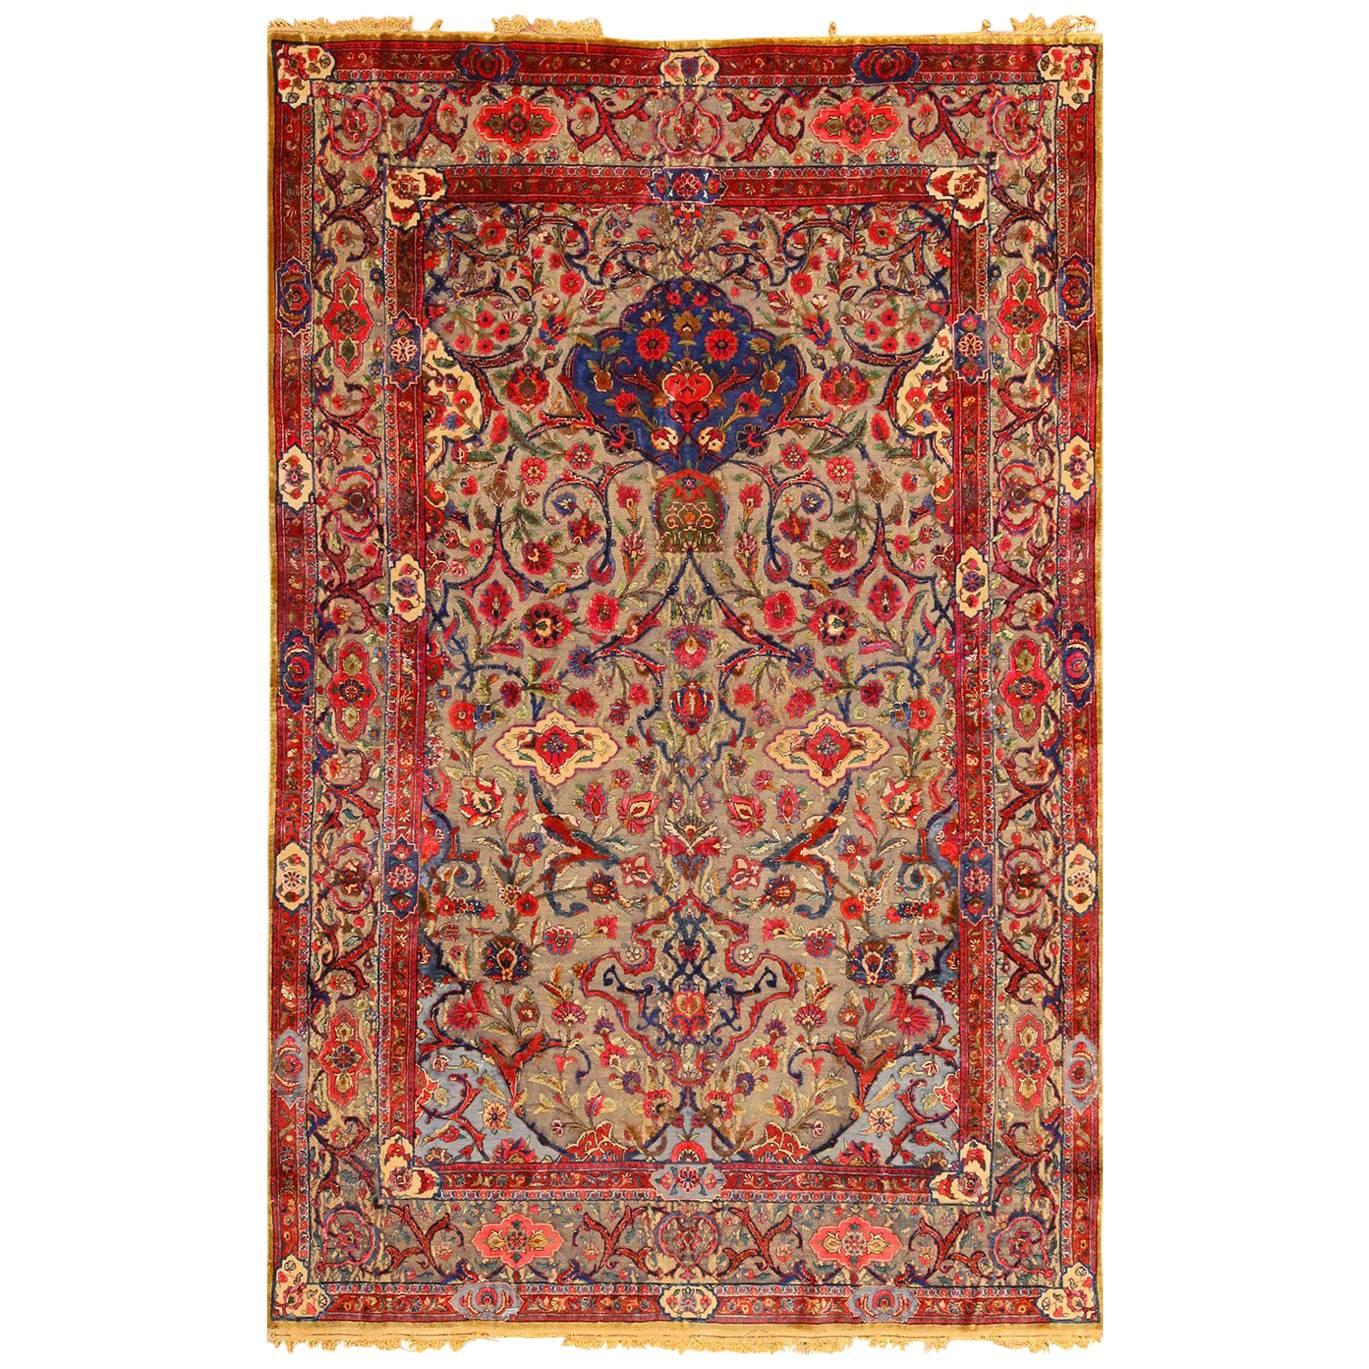 Antique Metallic Threading Silk Souf Kashan Persian Rug